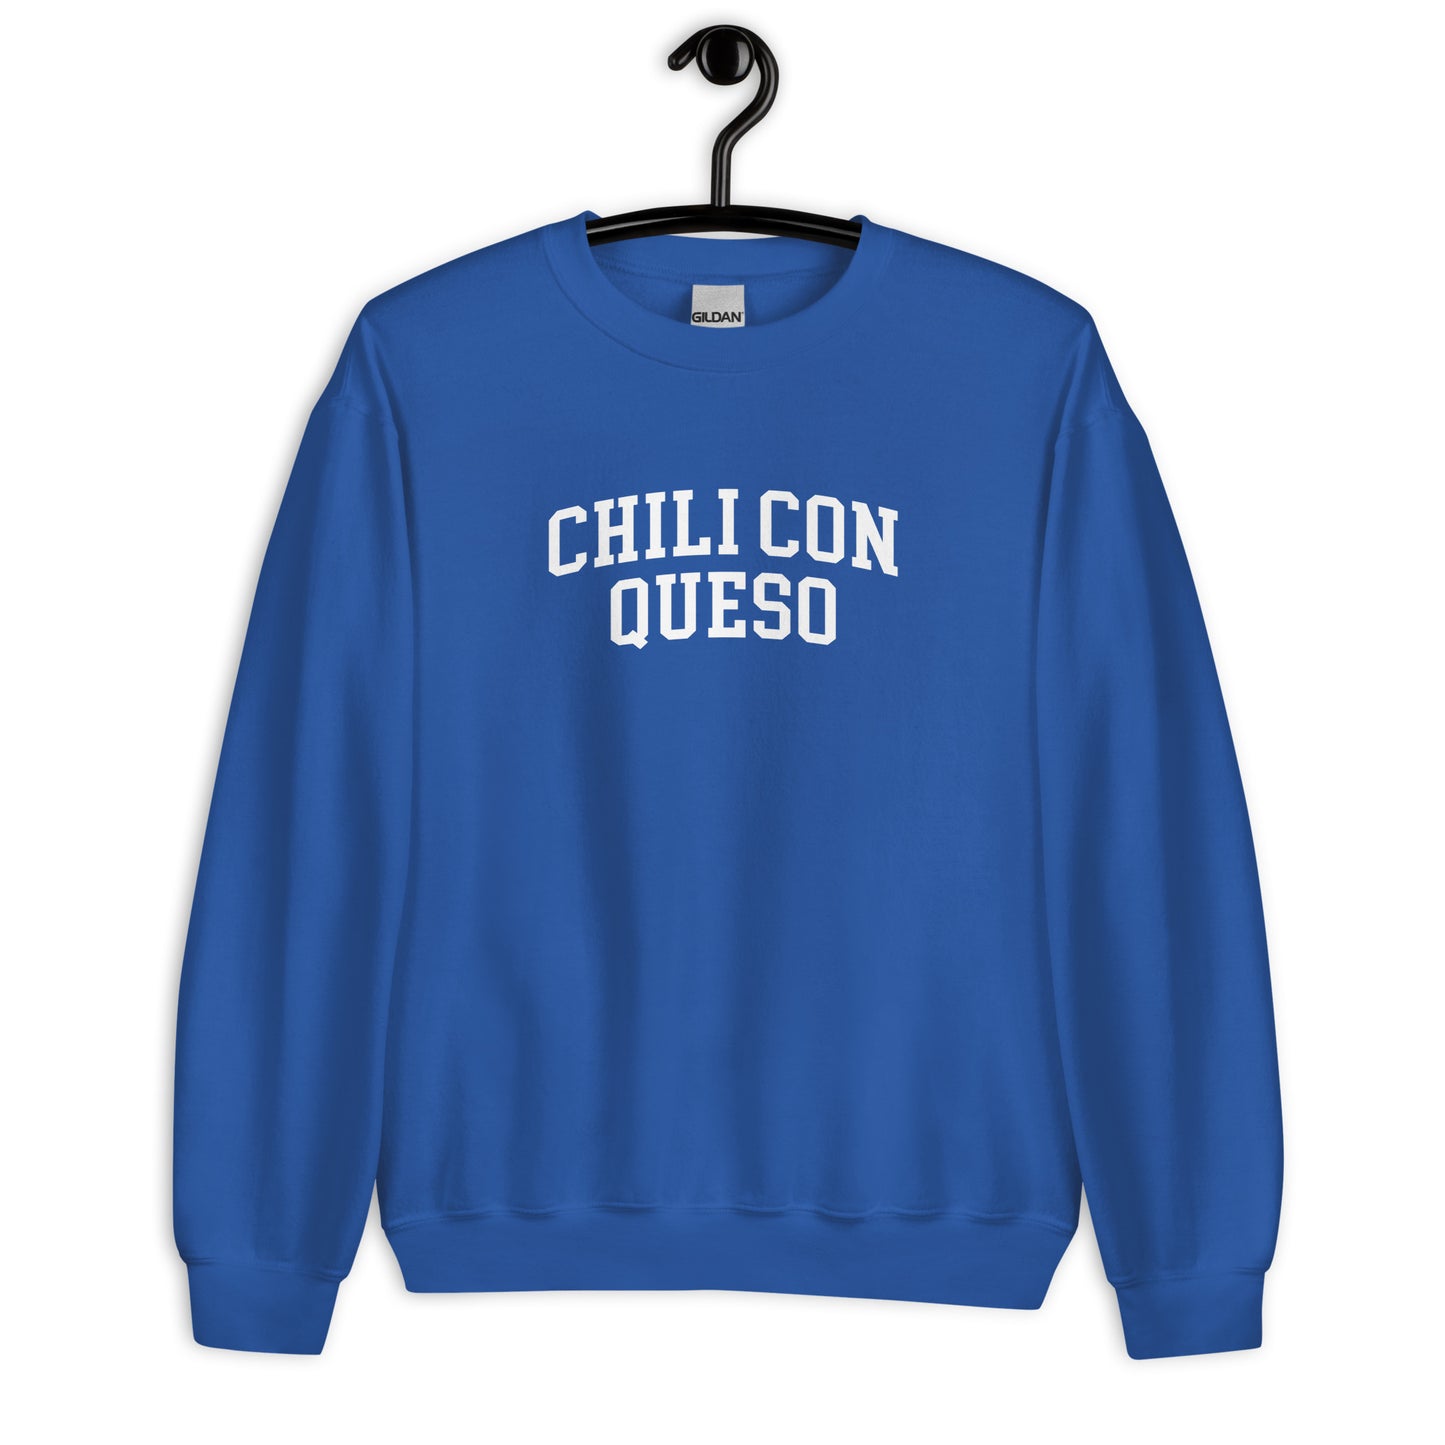 Chili Con Queso Sweatshirt - Arched Font